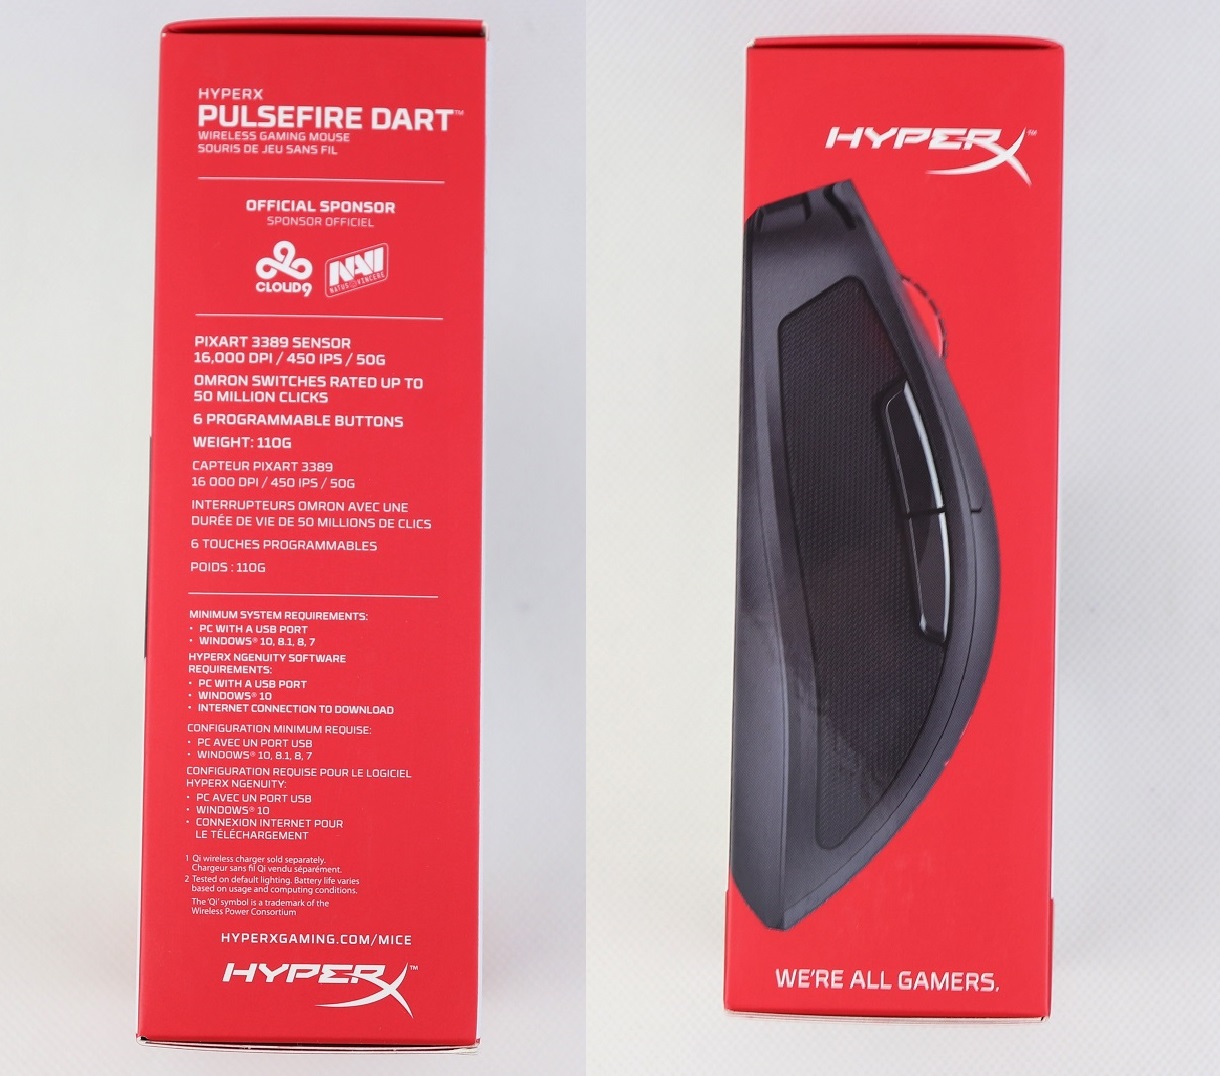 HyperX Pulsefire Dart Wireless Gaming Mouse